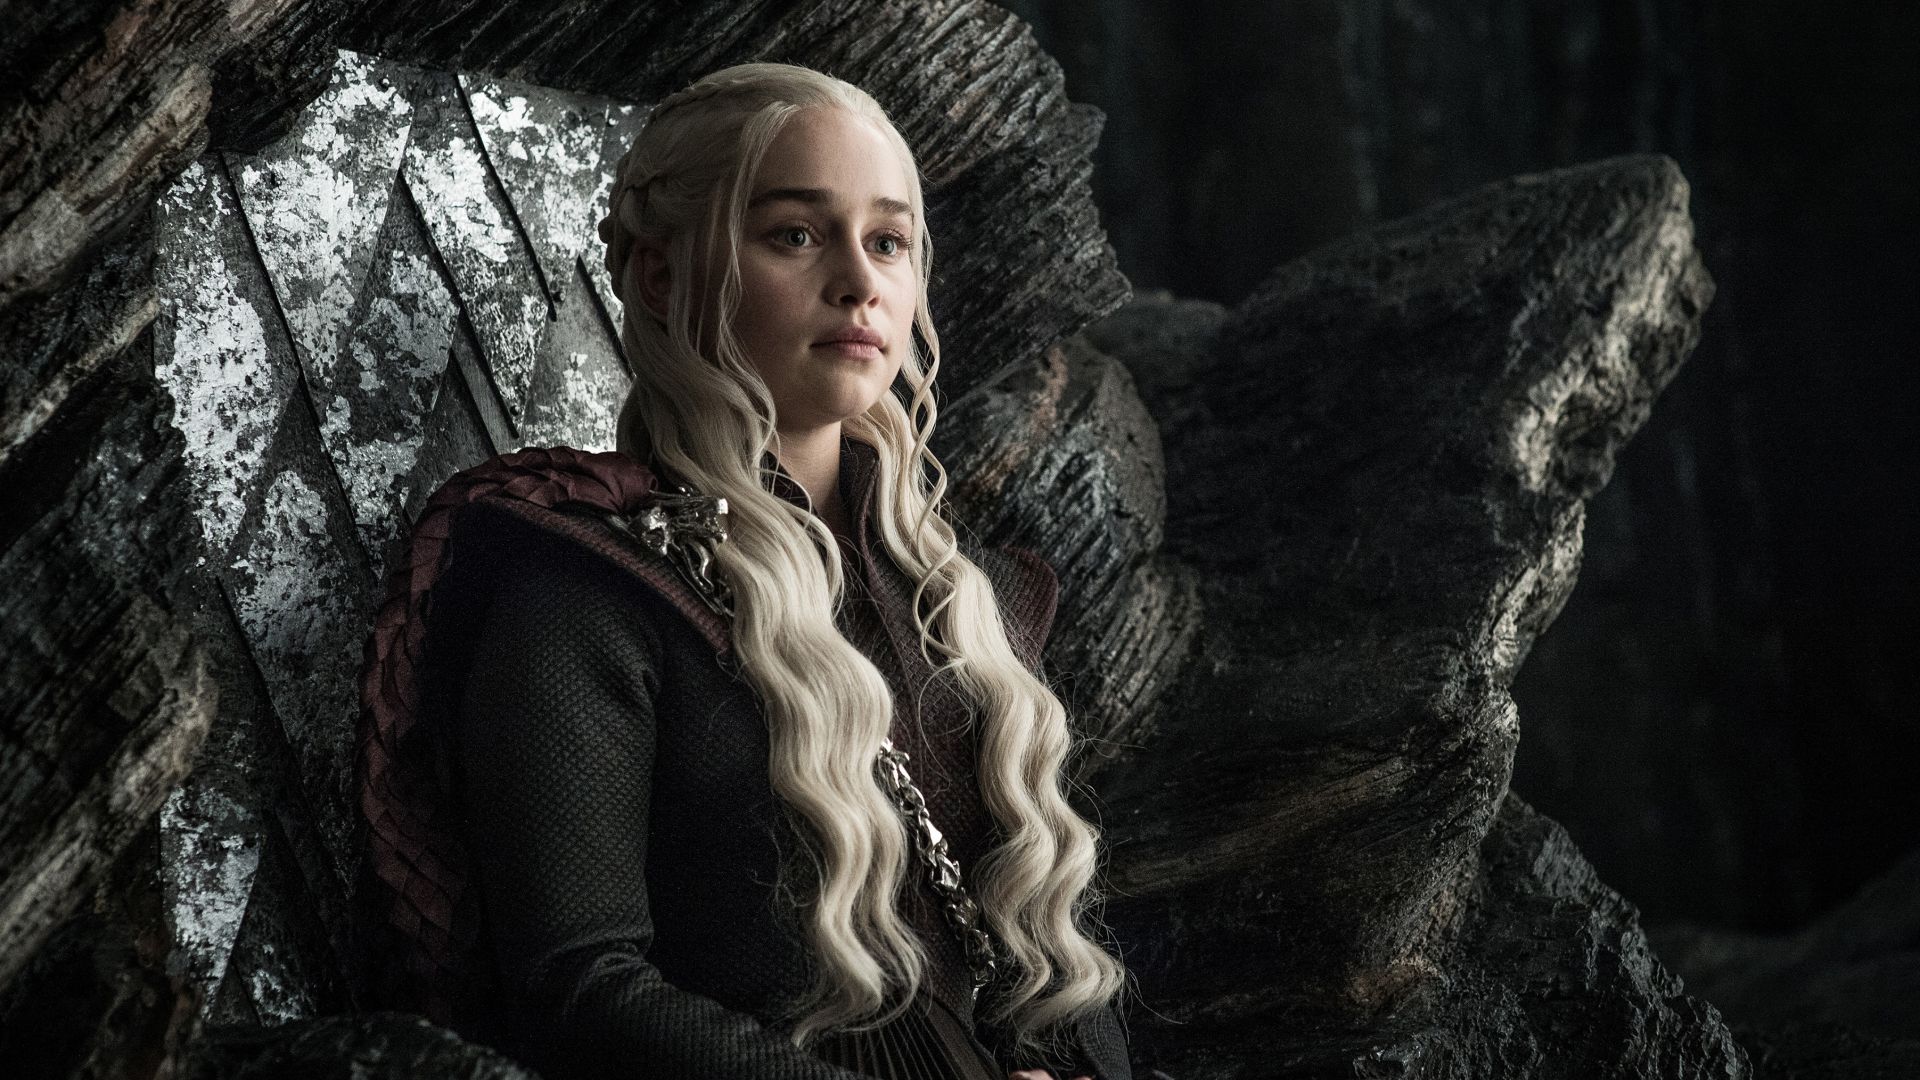 Wallpaper Daenerys Targaryen, Emilia Clarke, Game of thrones, Season 7